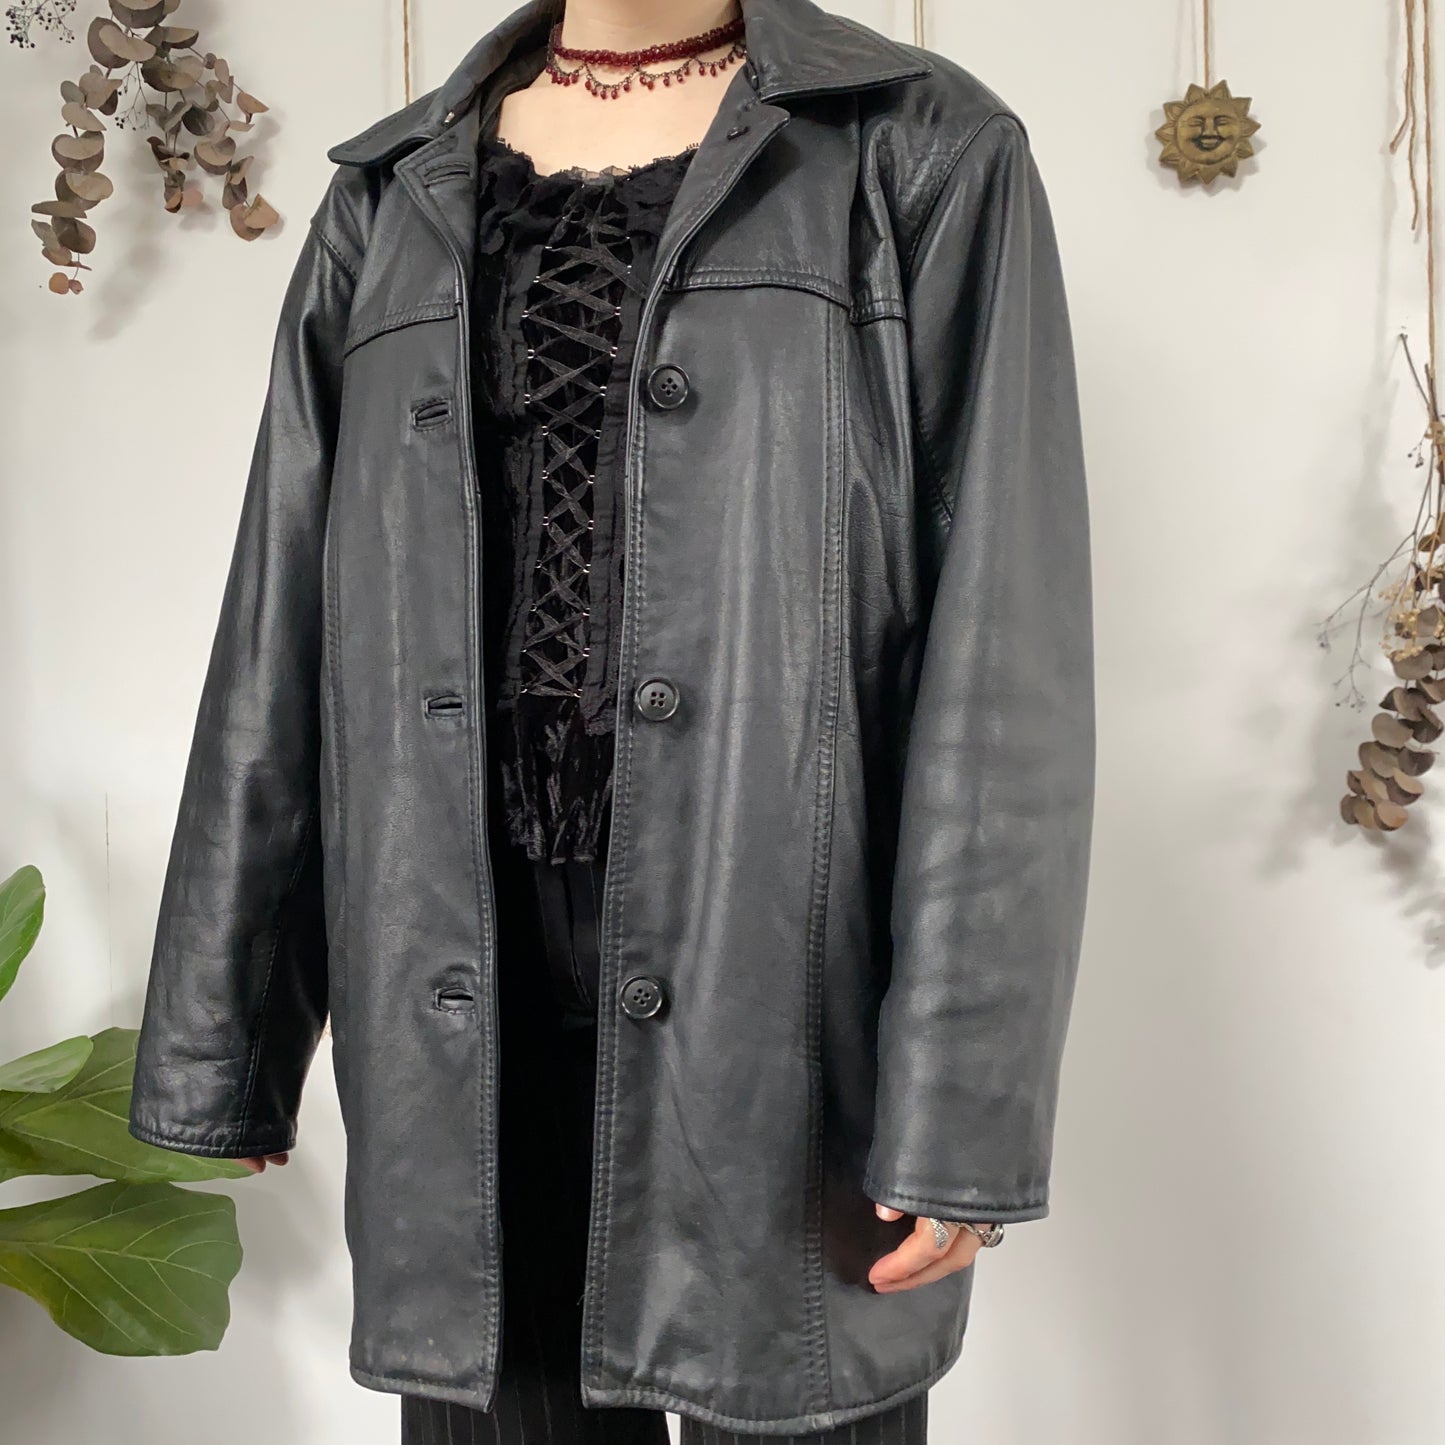 Black leather jacket - size XL